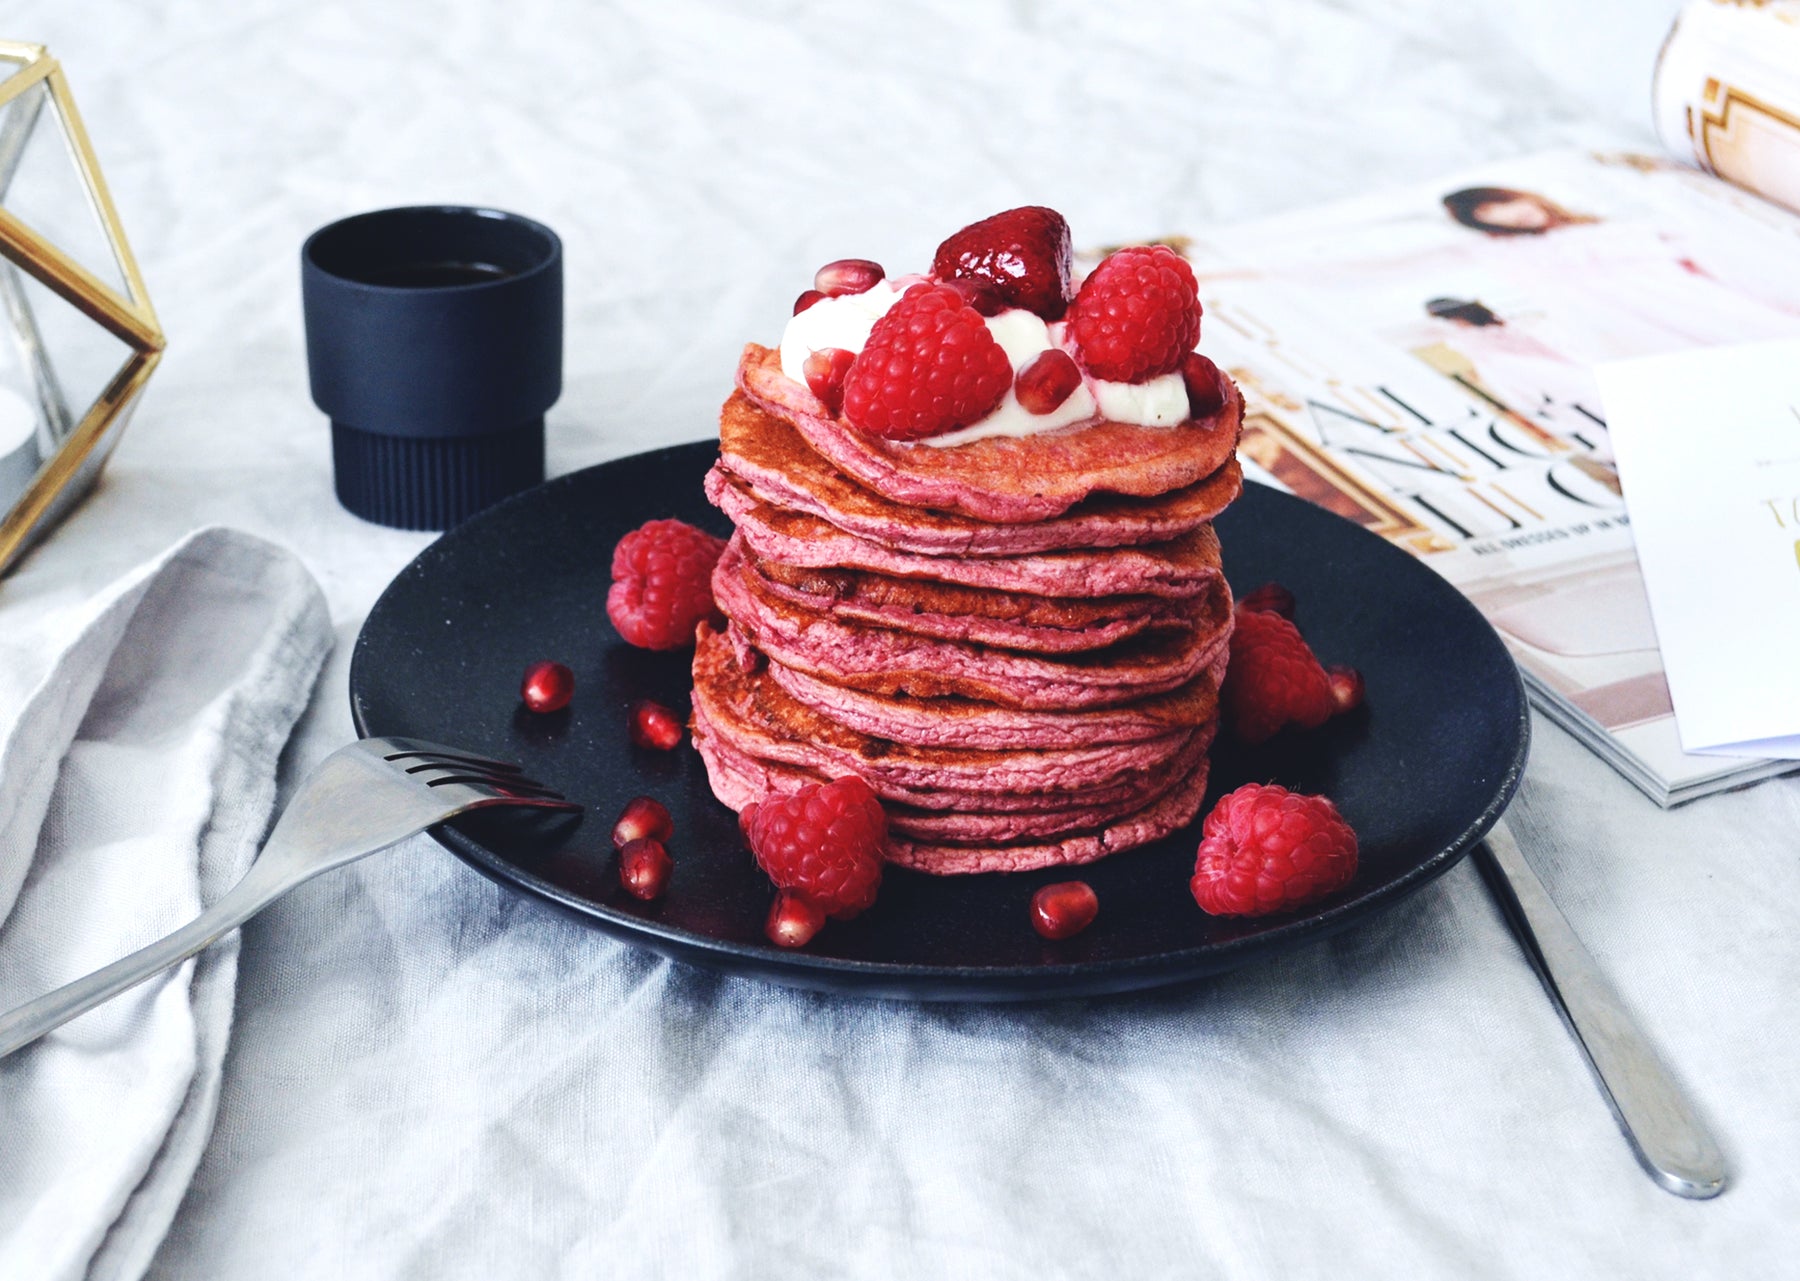 KIRR Eats: Wholesome Vegan Pancakes - KIRR